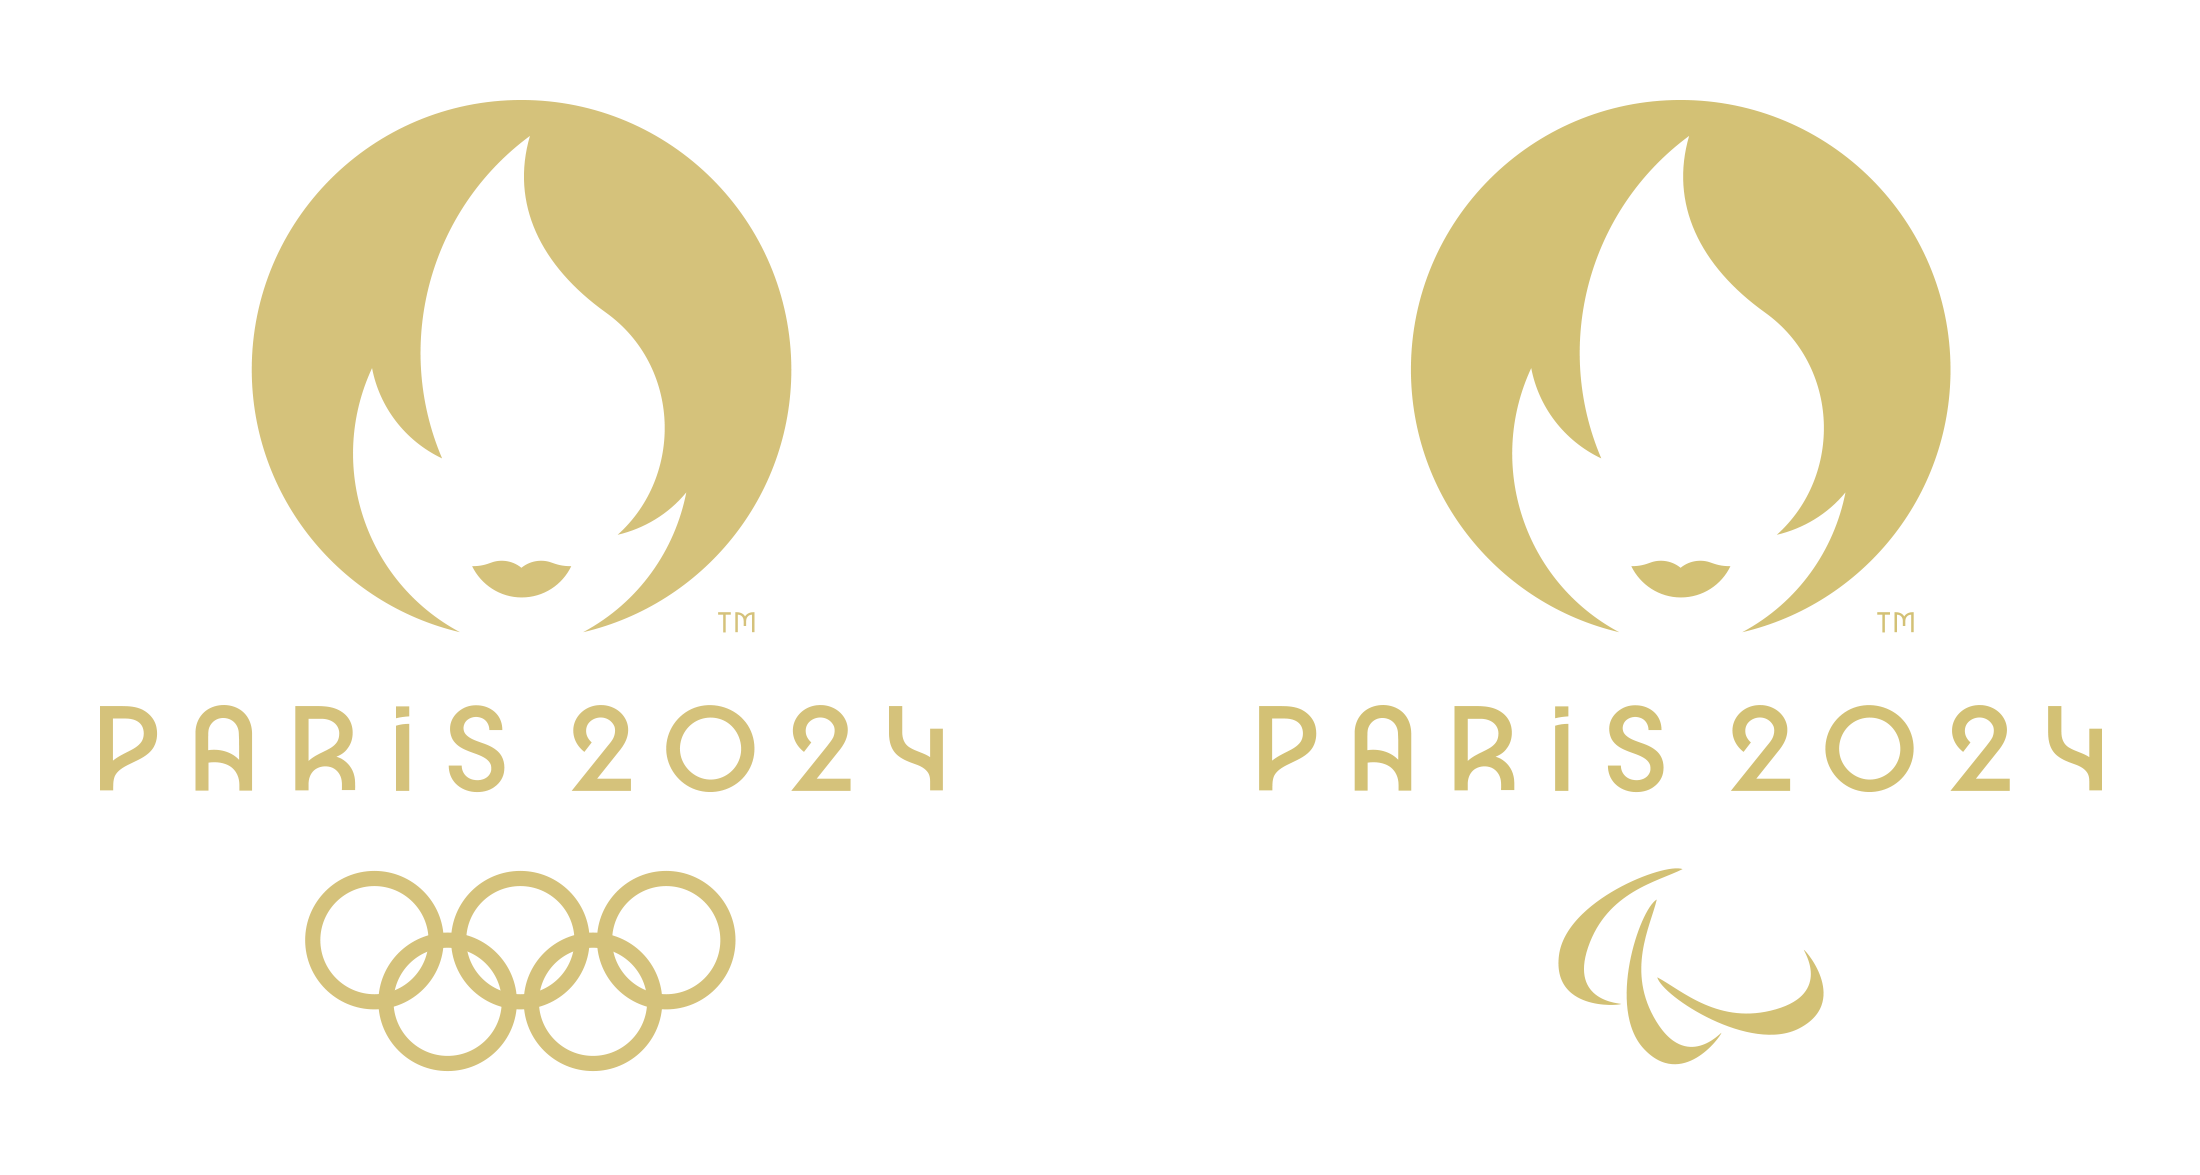 Paris2024 Official Logo Both 